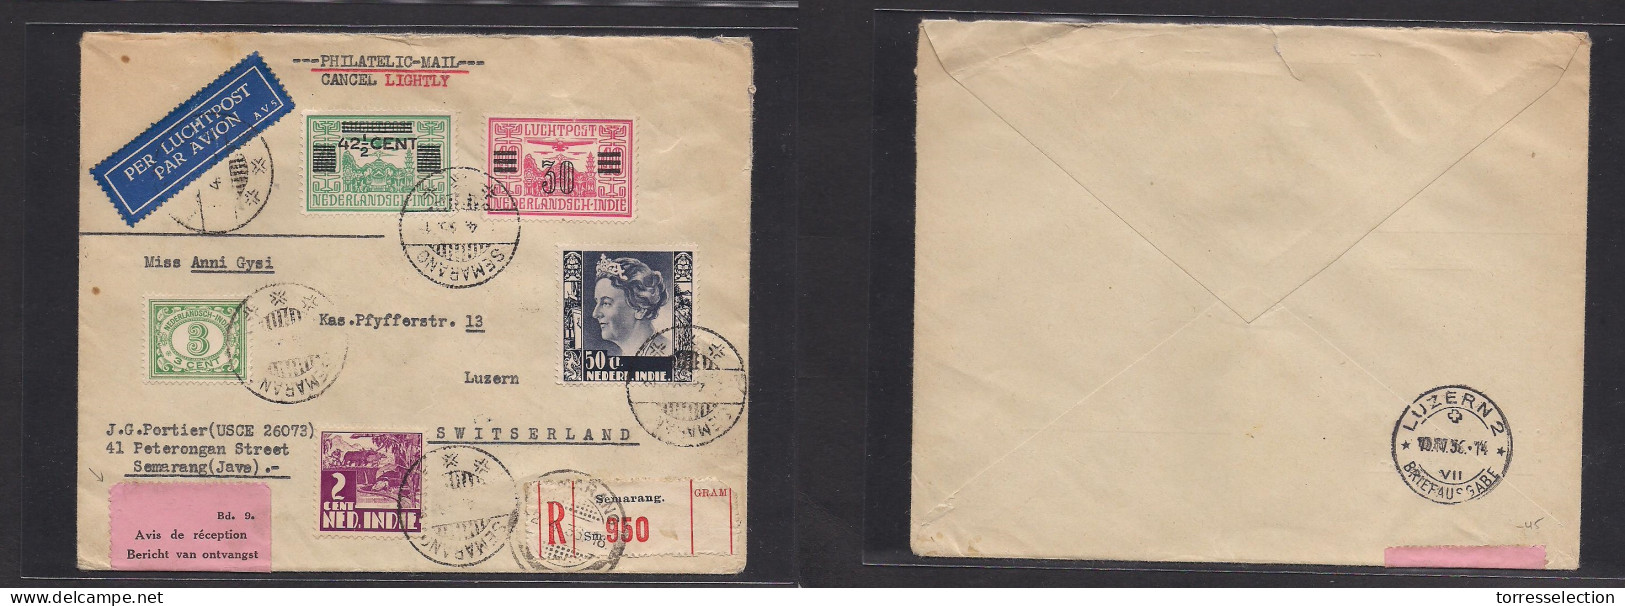 DUTCH INDIES. 1936 (3 April) Semarang - Switzerland, Luzern (10 April) Registered Airmail AR Multifkd Envelope. VF. - Indonesia